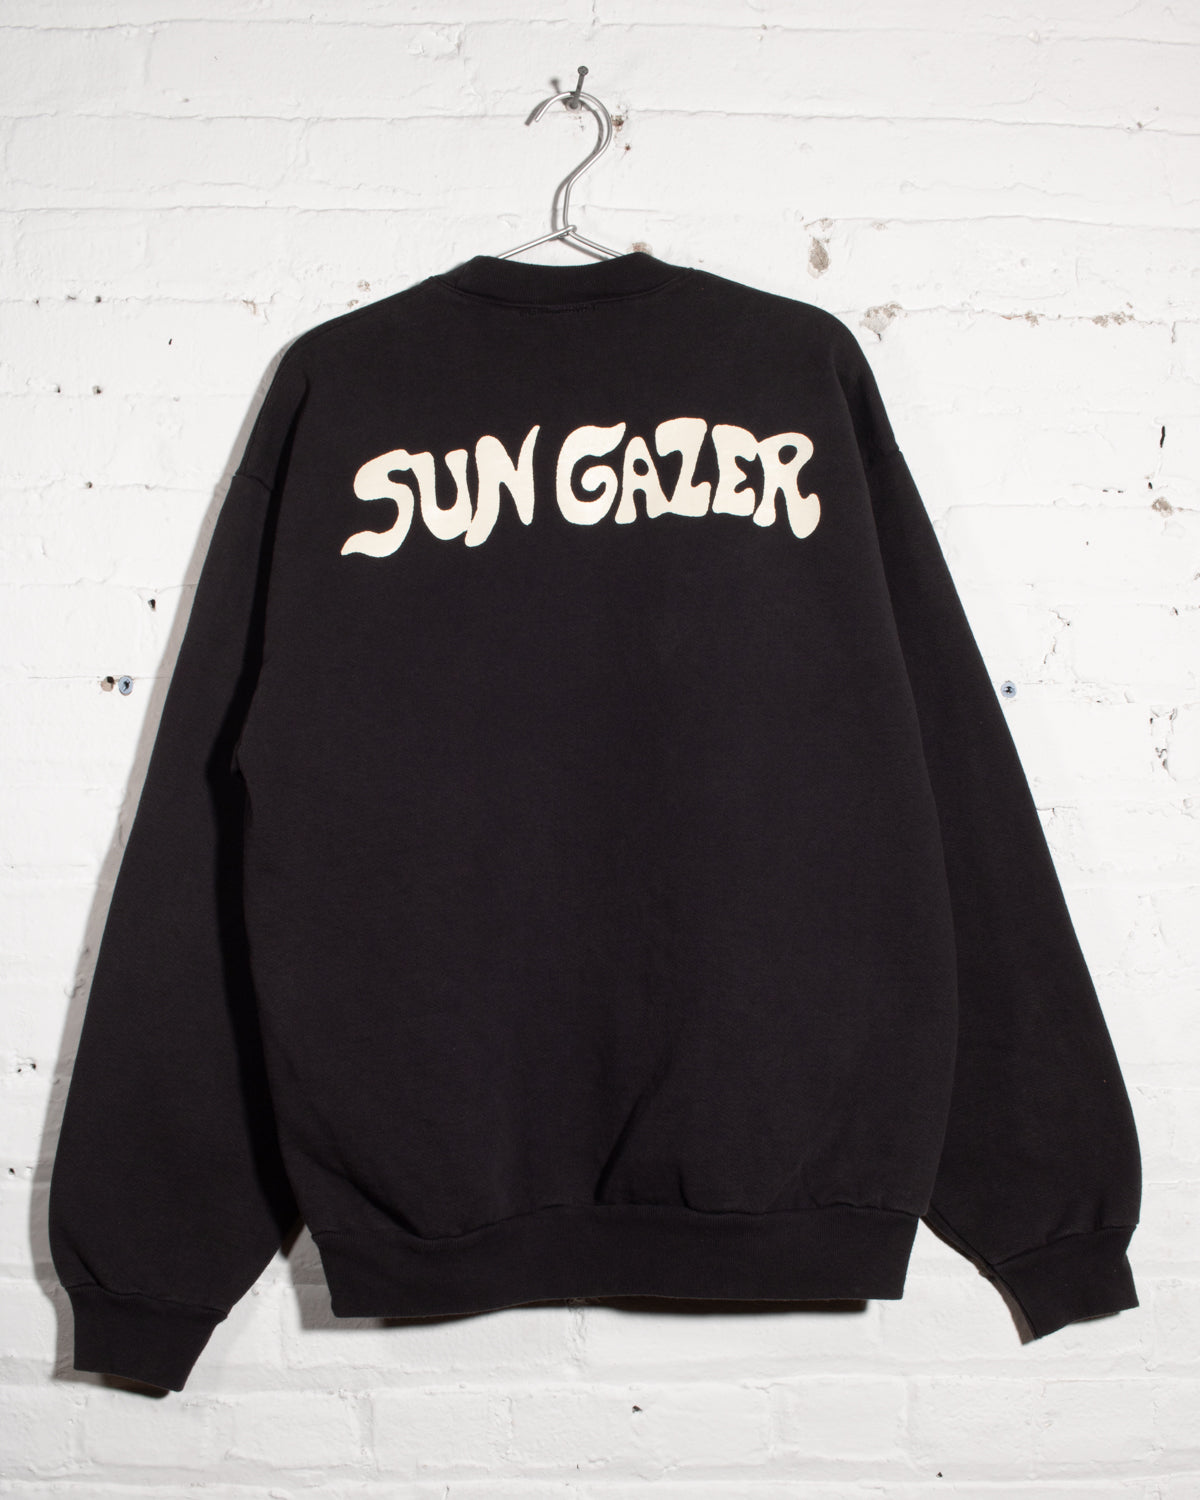 SUN GAZER sweatshirt